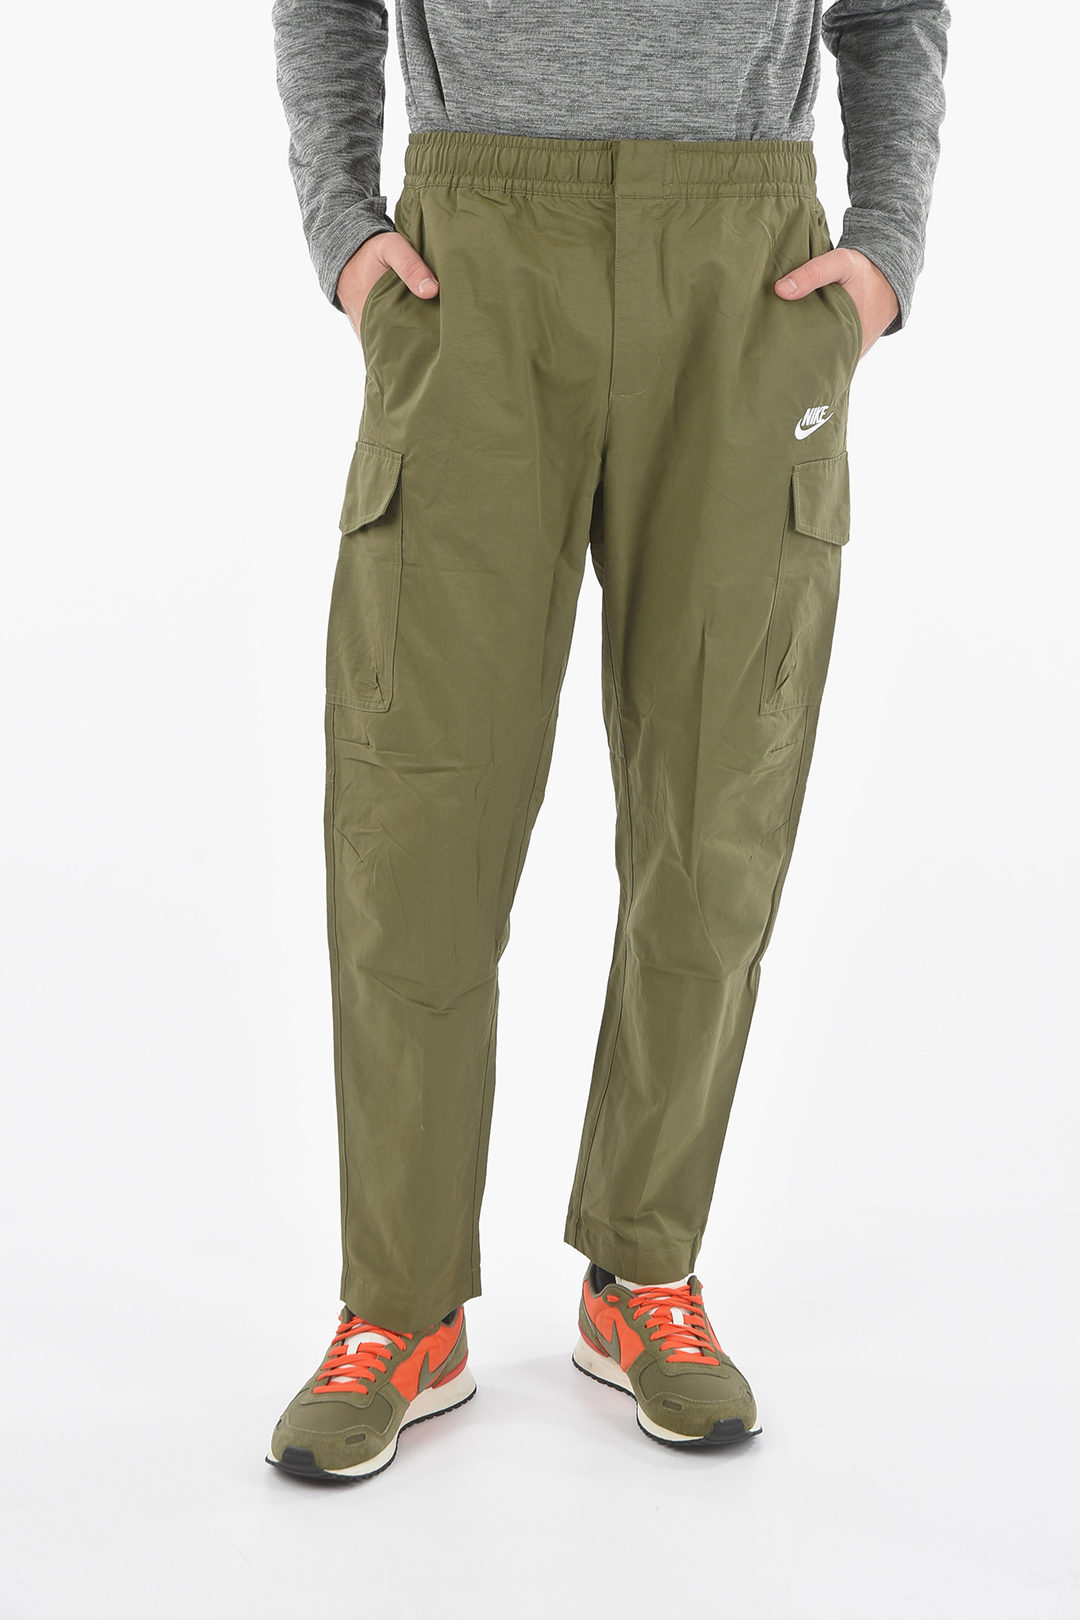 Nike Drawstring Waist Solid Color Cargo Pants men - Glamood Outlet